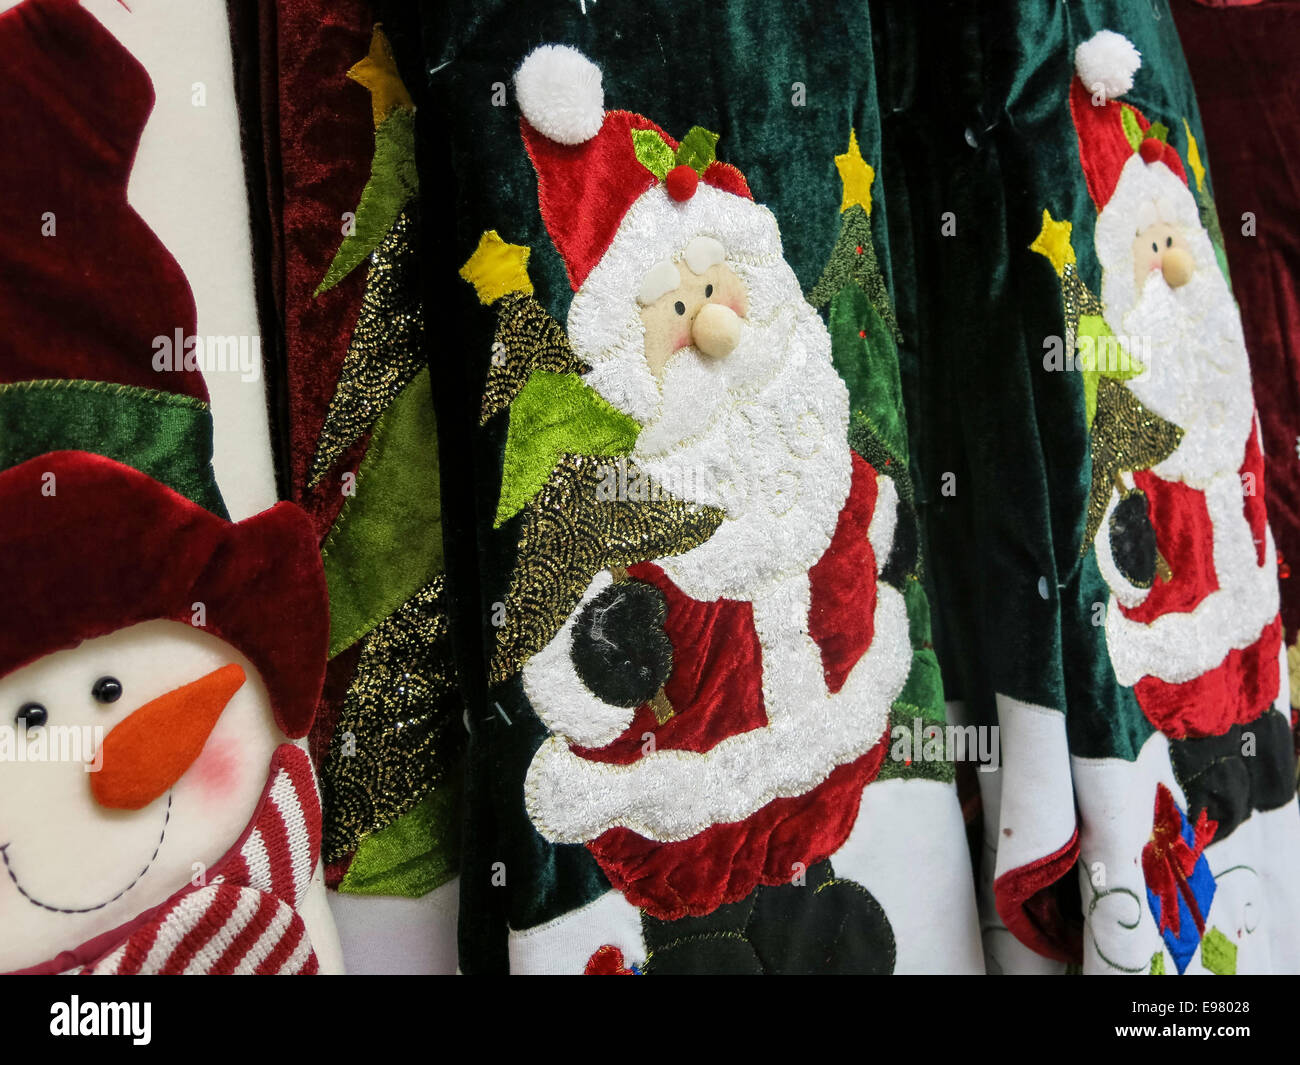 Kmart Store Display, NYC Stock Photo - Alamy